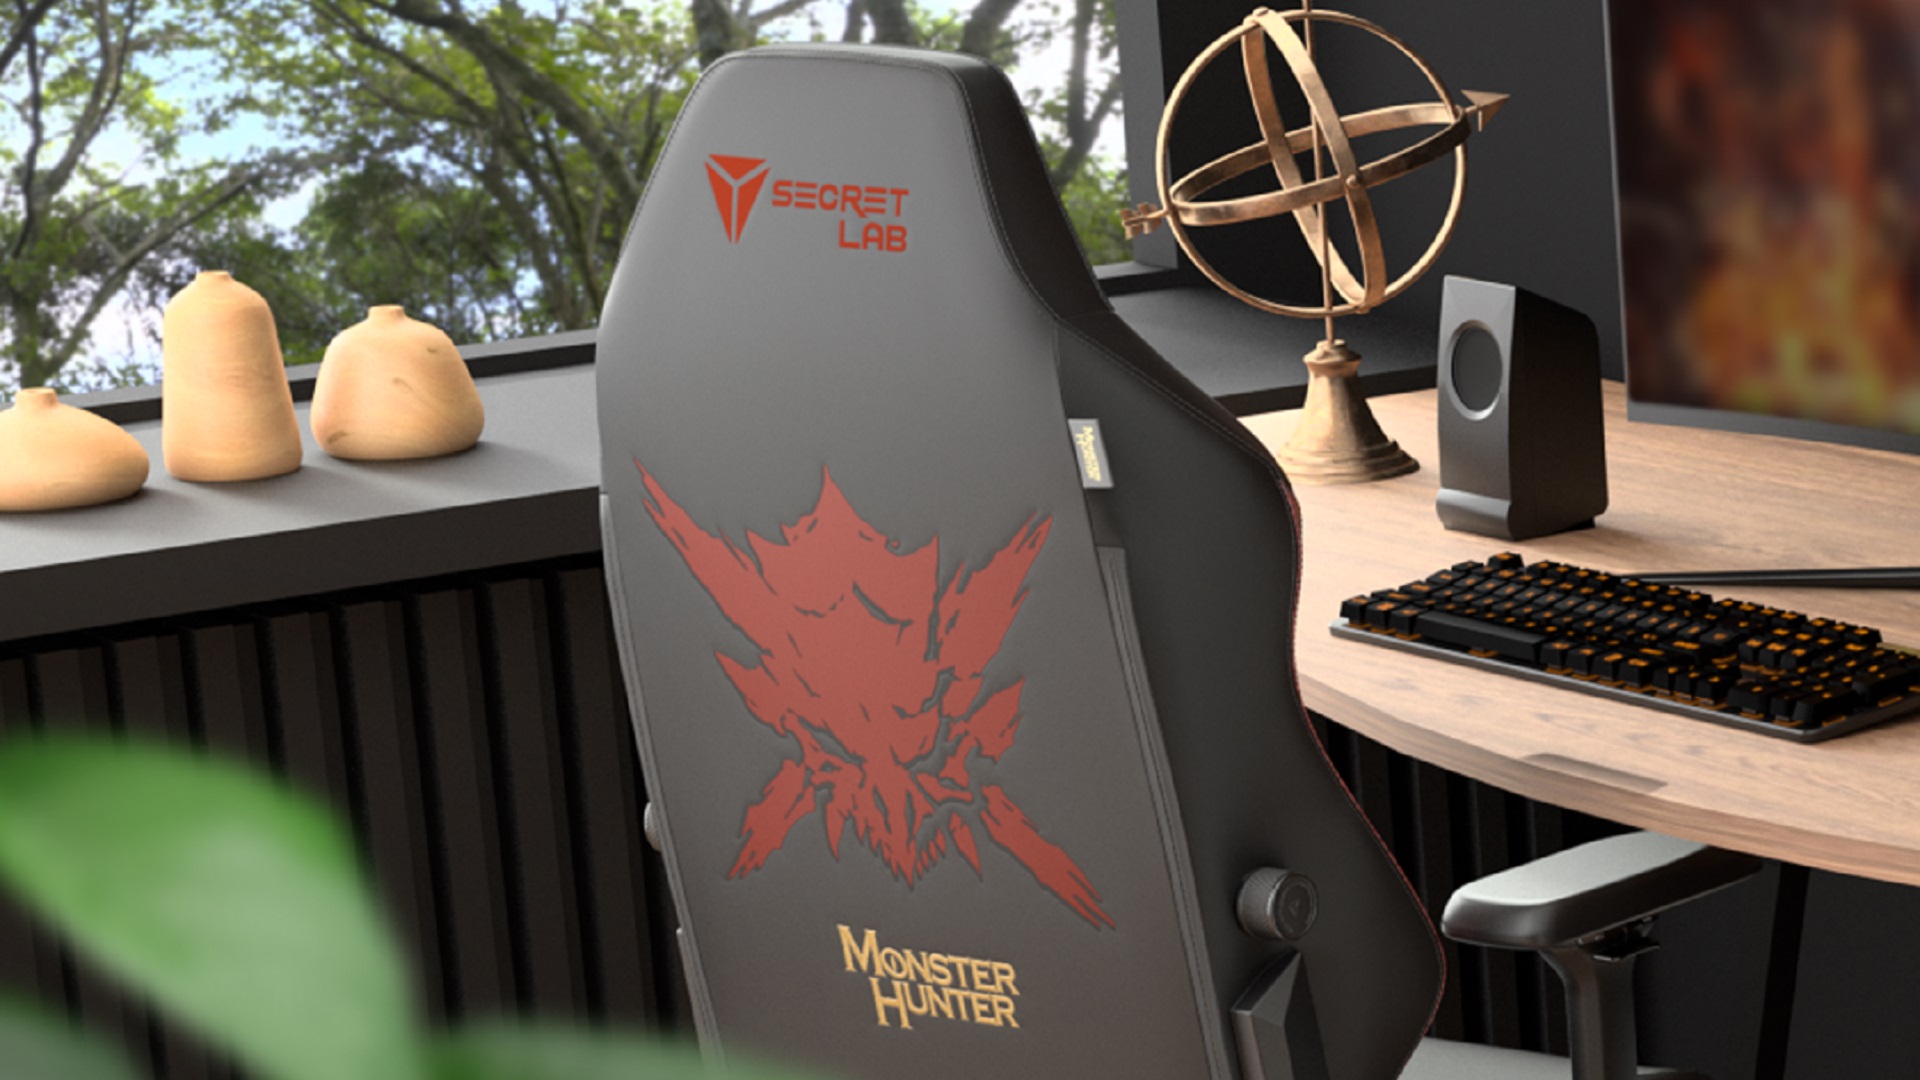  Secretlab Titan Evo Monster Hunter Gaming Chair